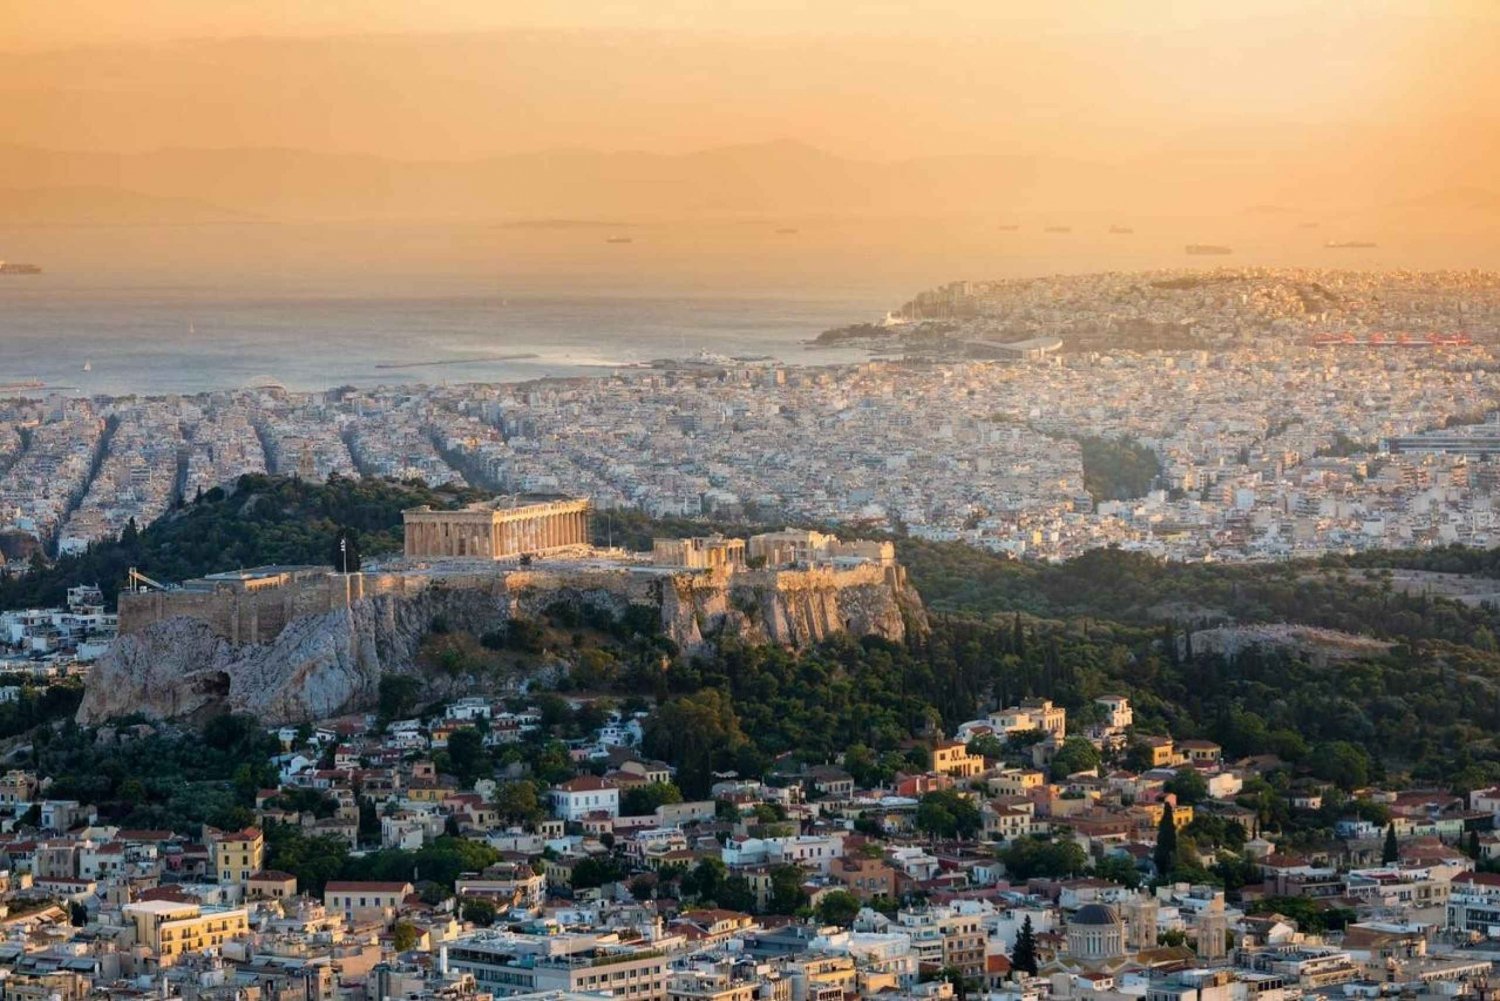 Atenas: tour guiado de la Acrópolis en español sin tickets de entrada